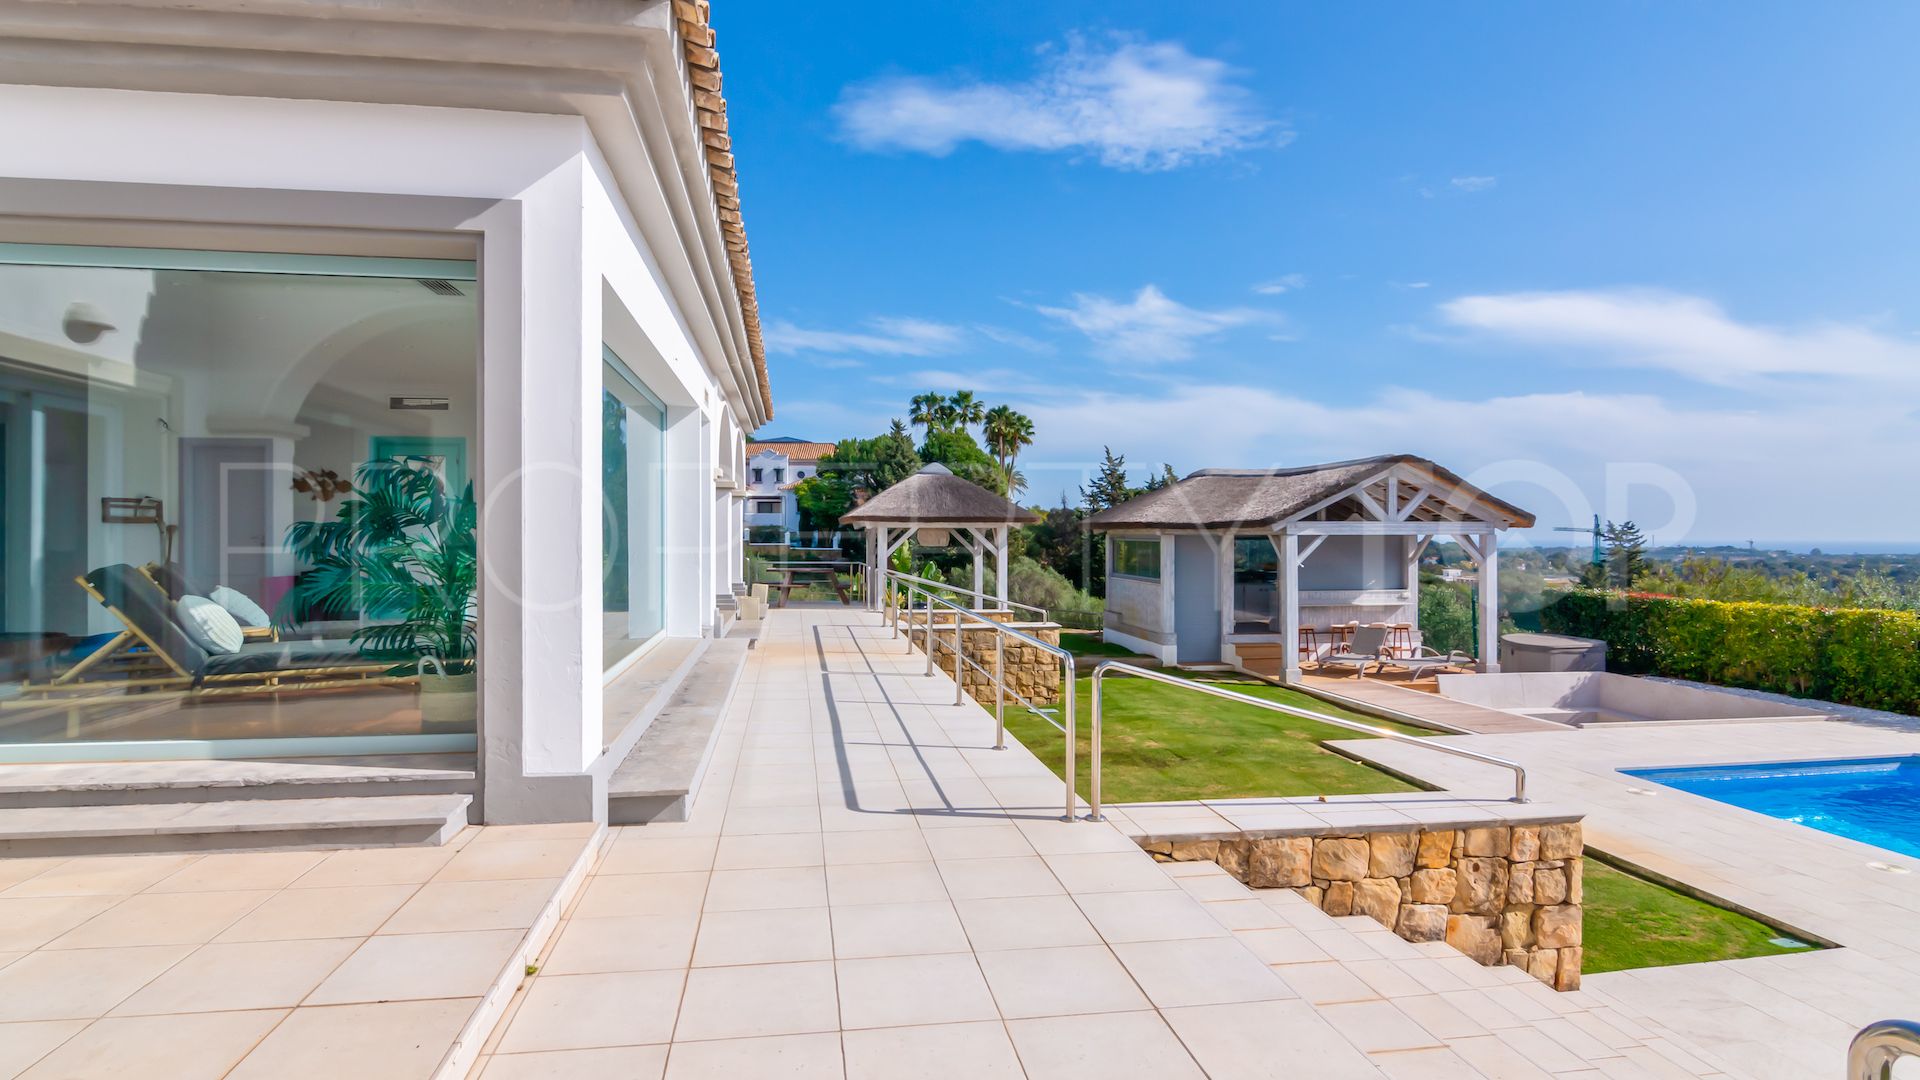 For sale villa in La Reserva with 5 bedrooms